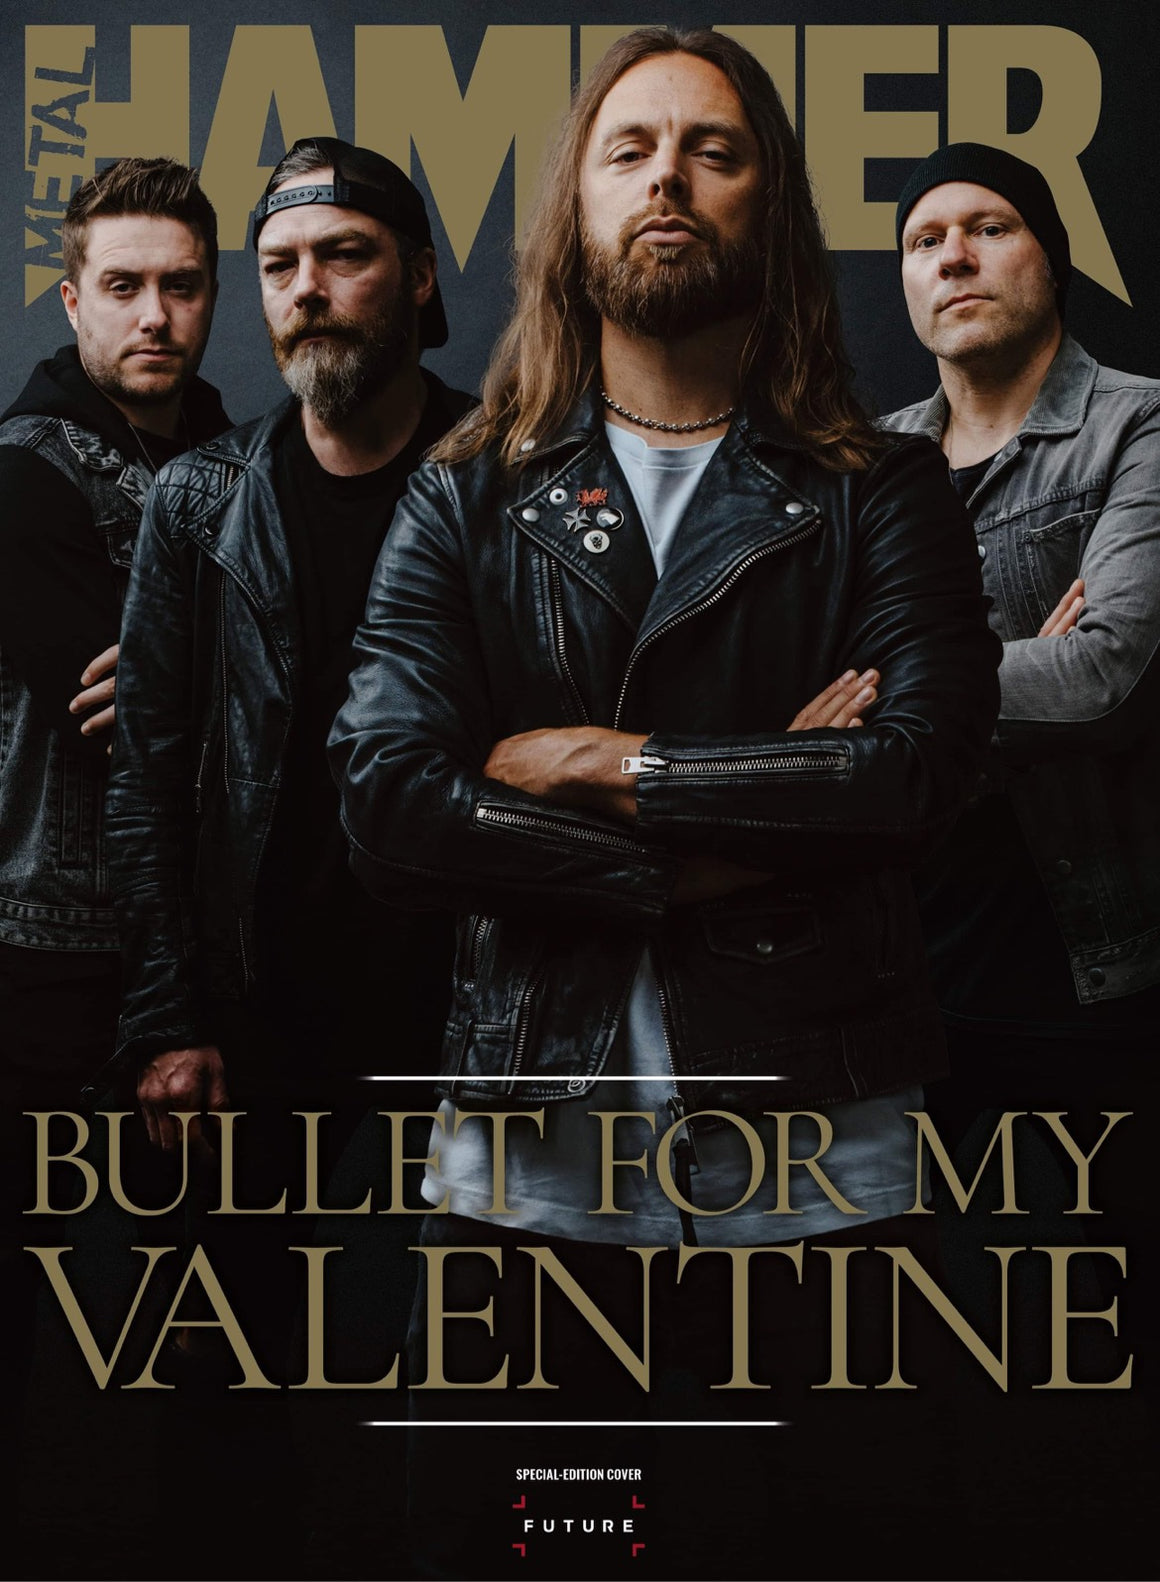 Metal Hammer magazine #354 2021 Bullet For My Valentine - Their definitive interview